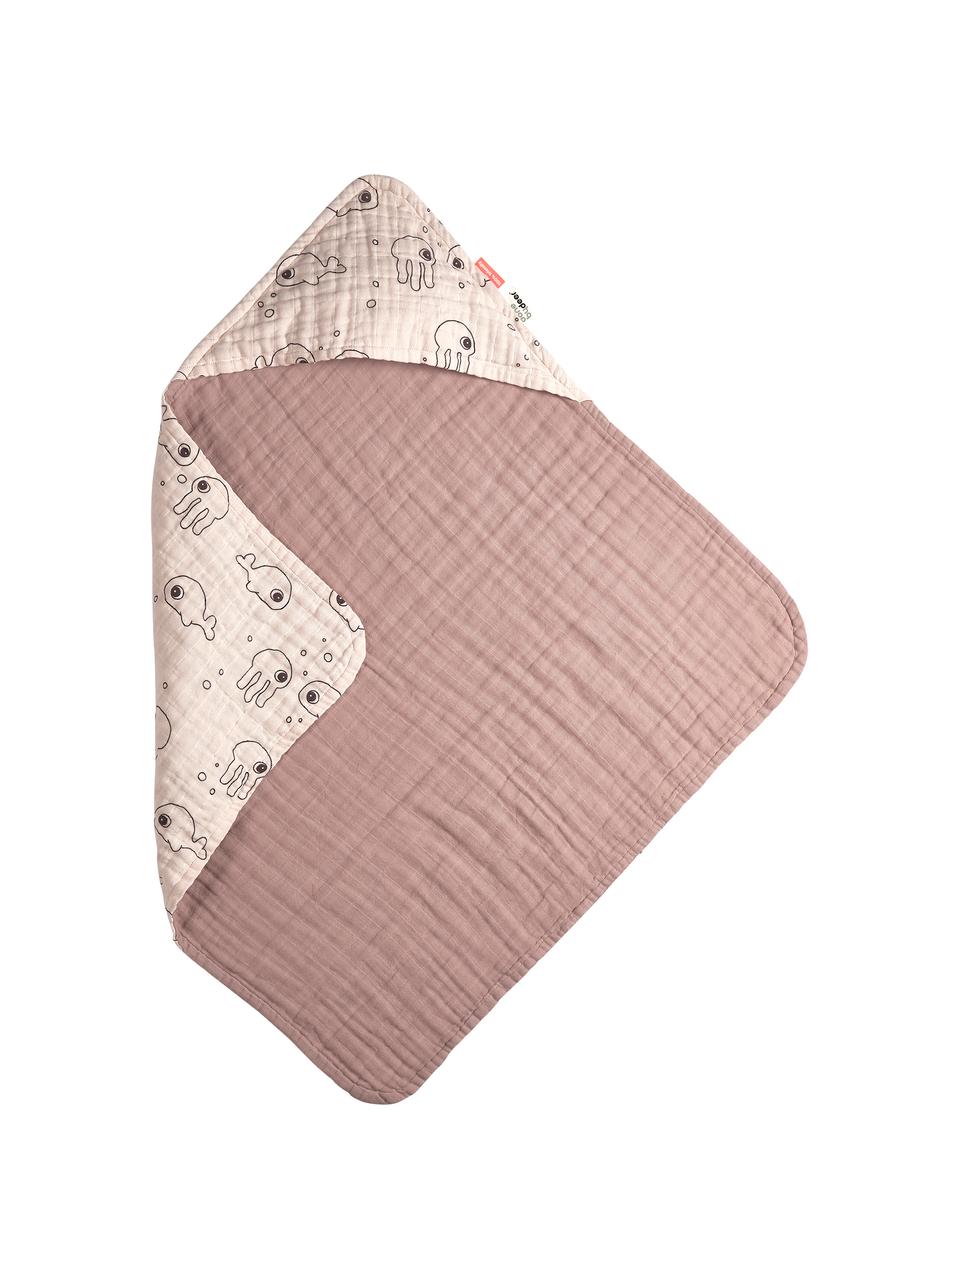 Dětský ručník Sea Friends, 100 % bavlna, certifikát Oeko-Tex, Růžová, Š 70 cm, D 70 cm